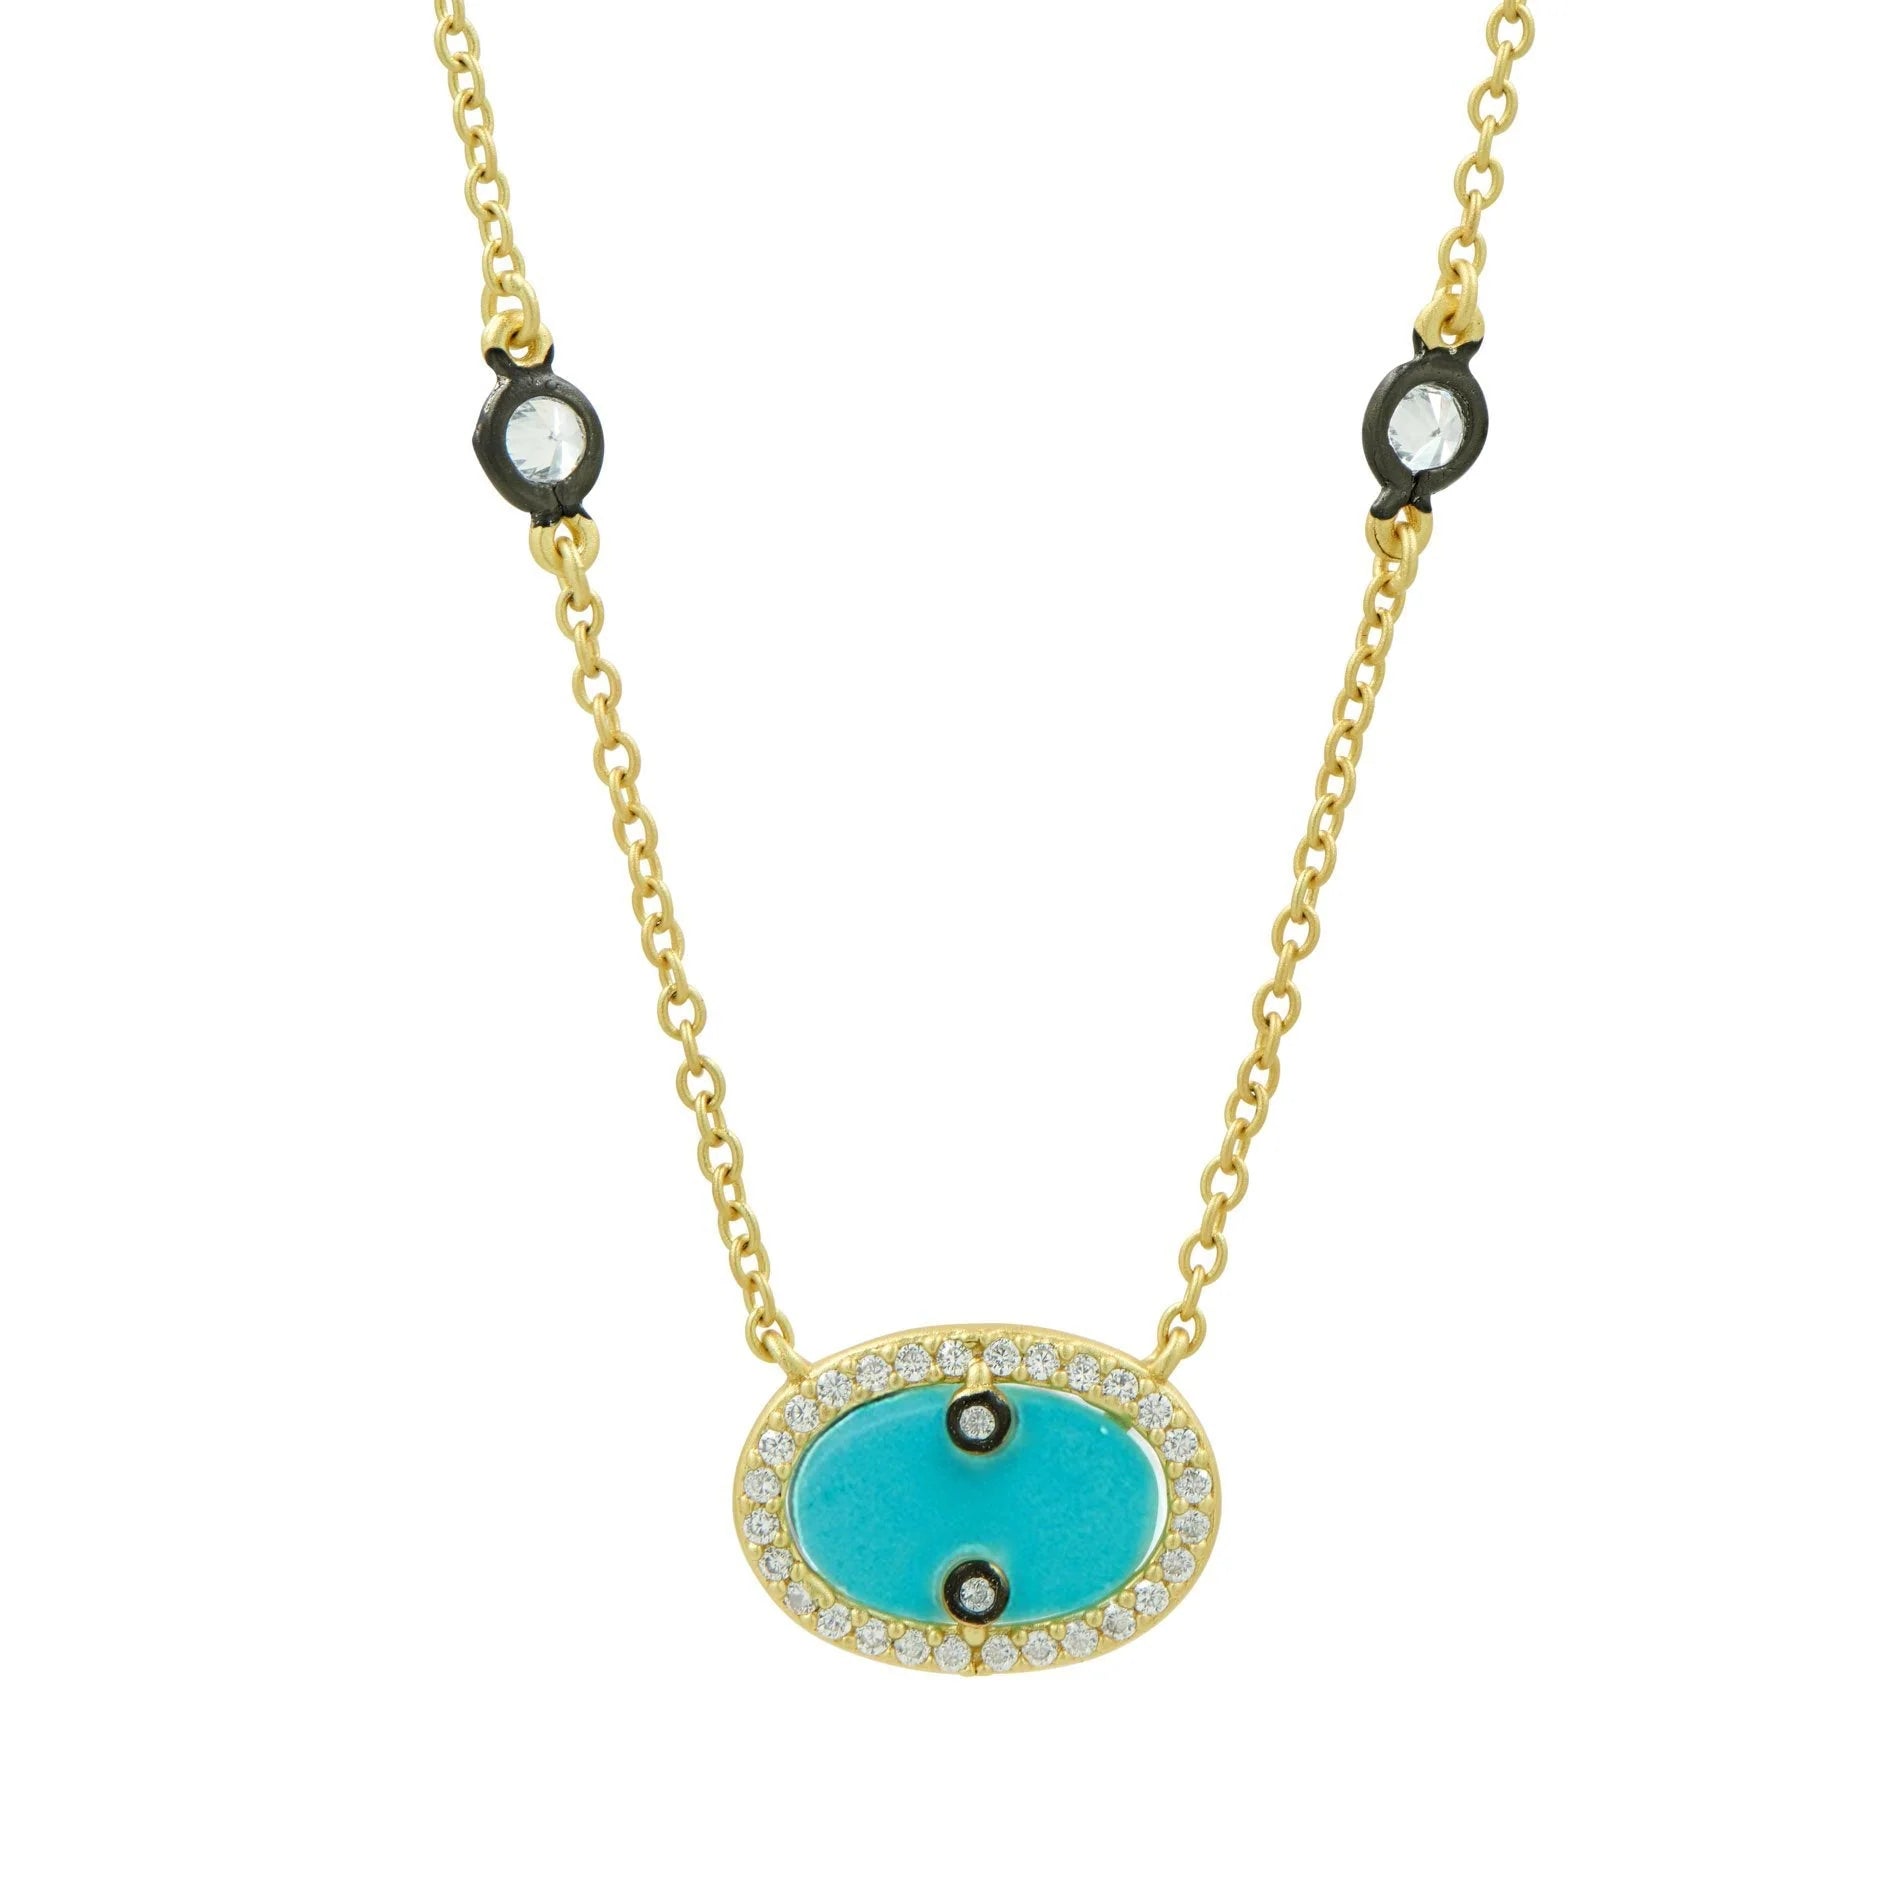 Freida Rothman "Hint of Sparkle Turquoise Necklace"